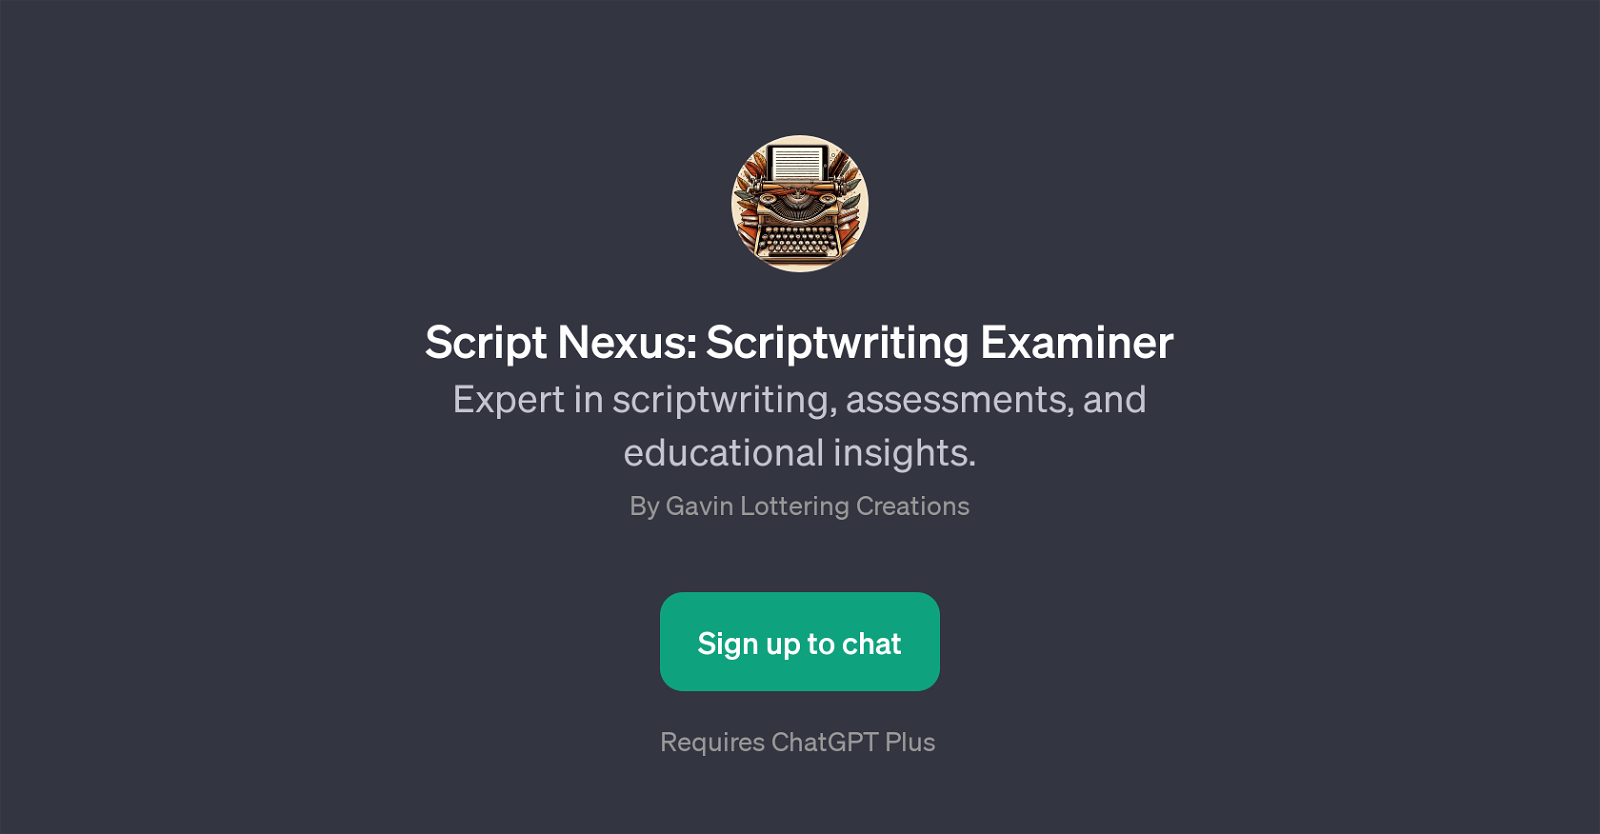 Script Nexus: Scriptwriting Examiner website